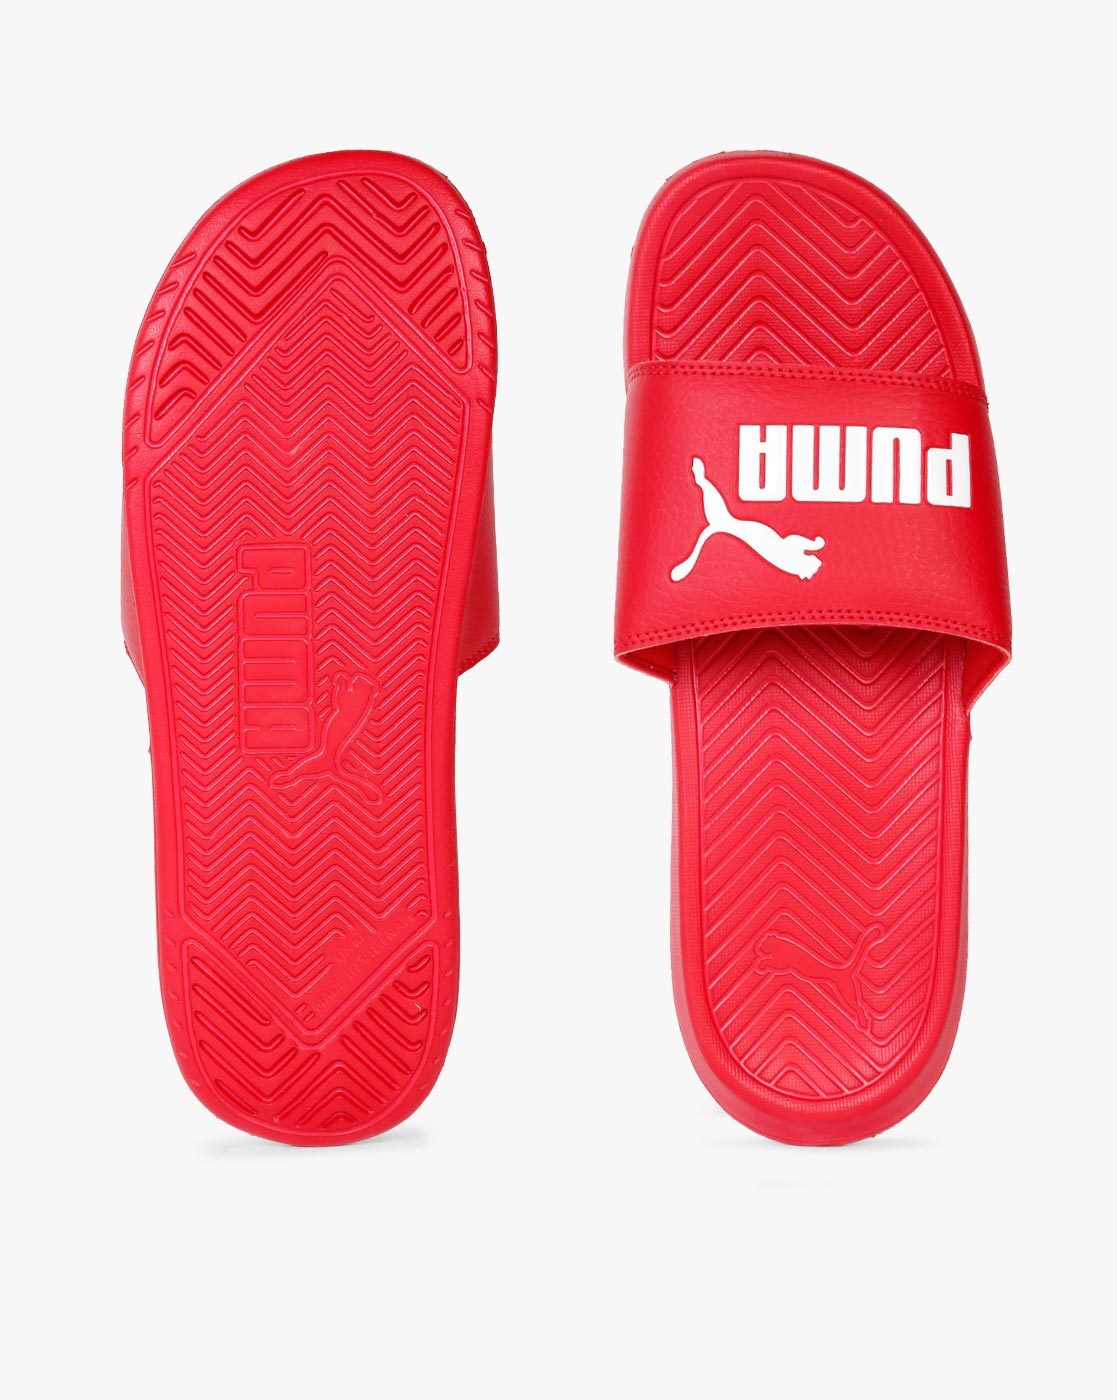 puma sandals red